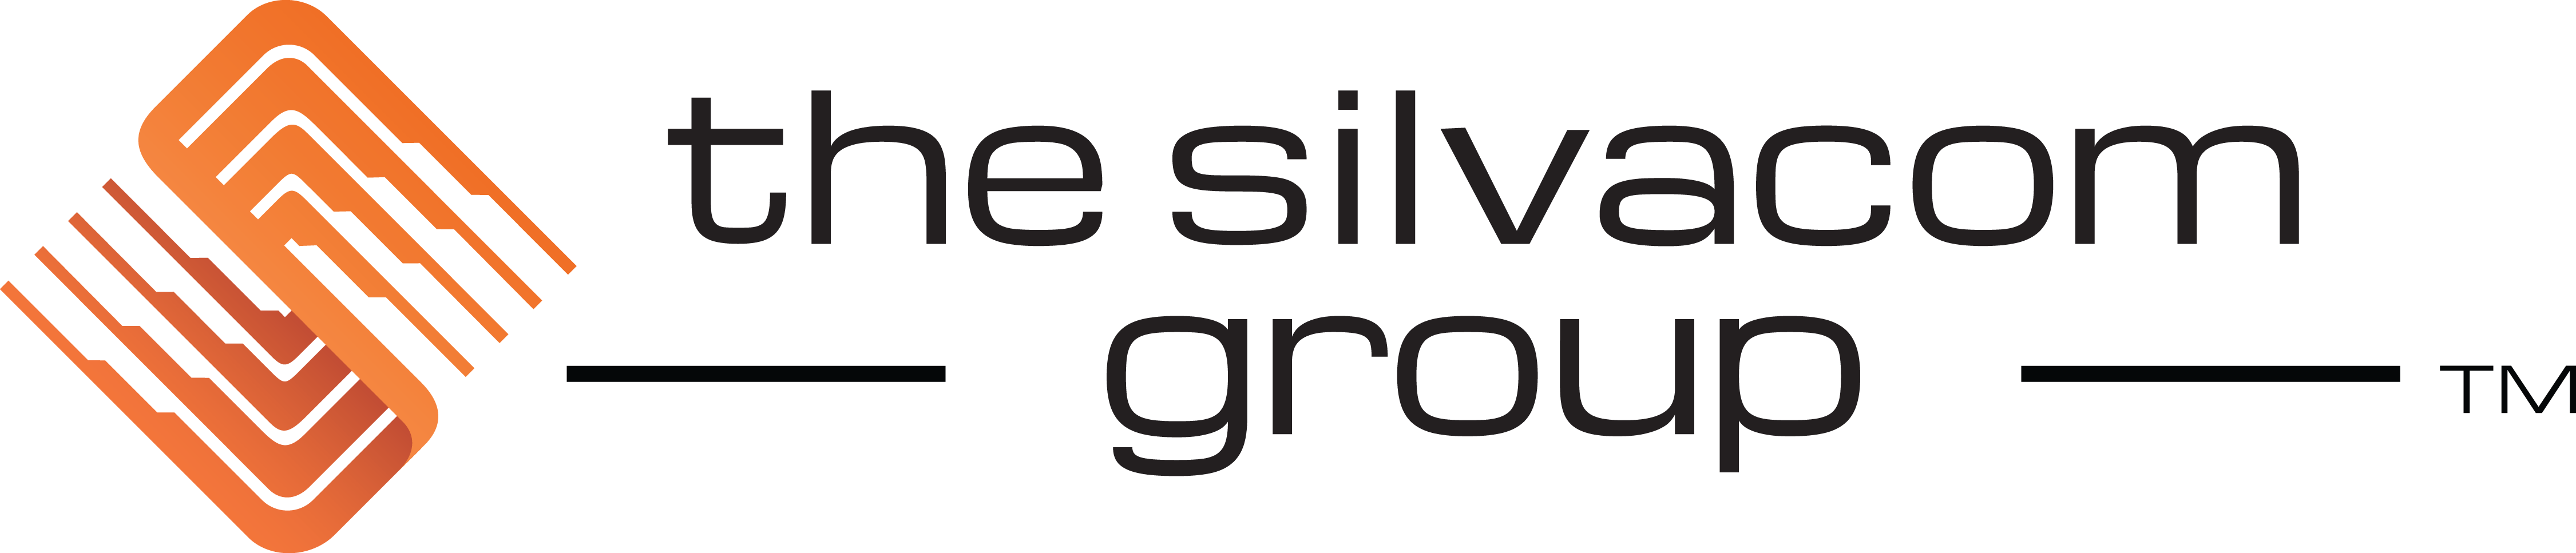 2013_Silvacom_Group_Logo_Horizontal_GRAD_BLACK